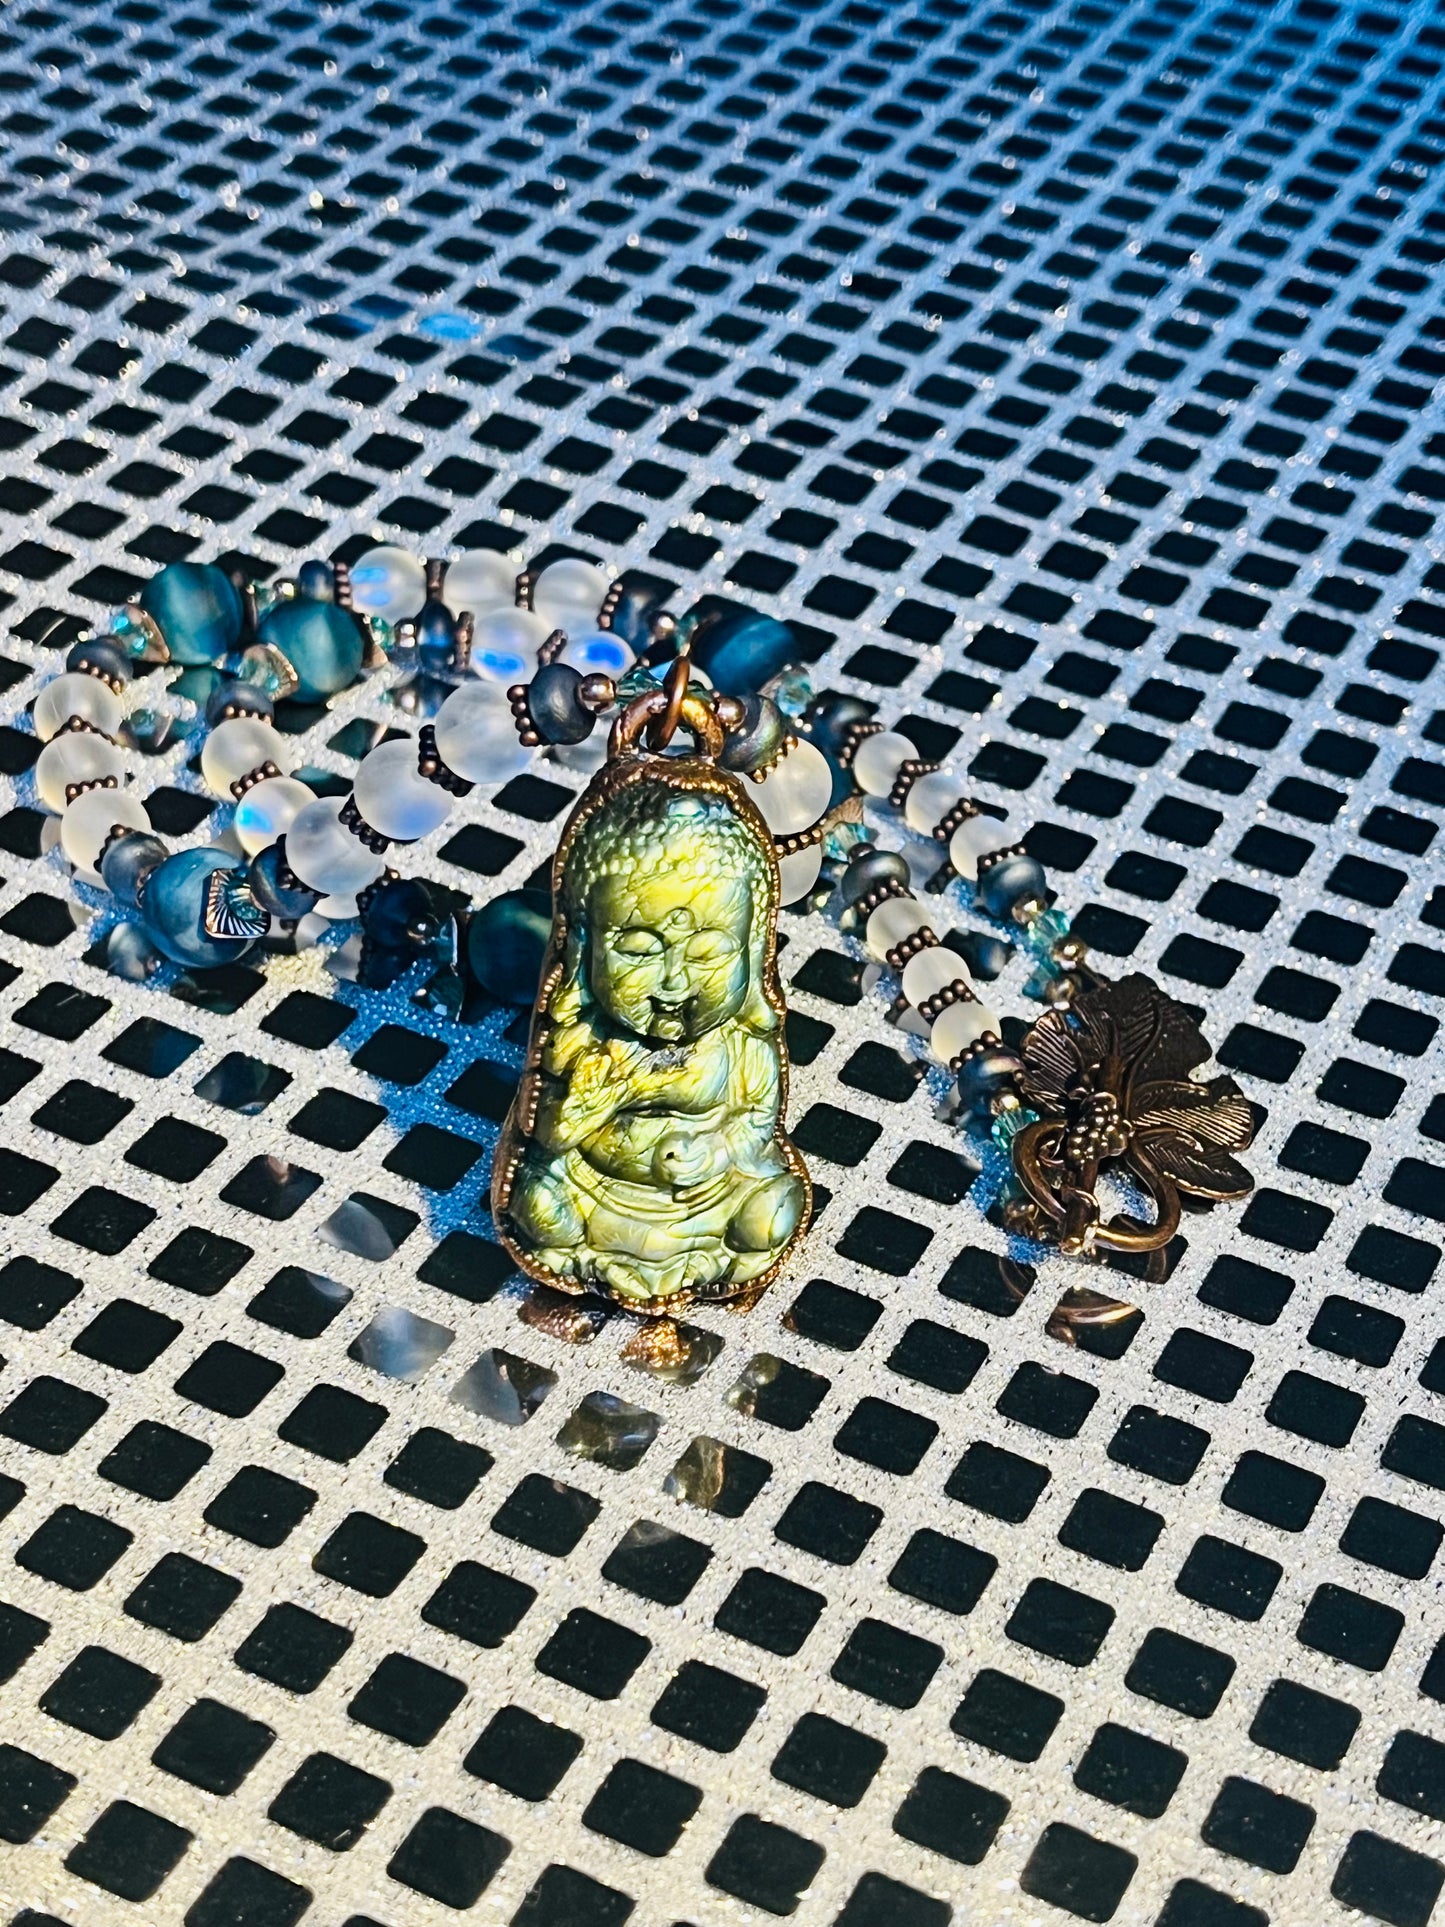 Labradorite Buddha Necklace and Earring Set